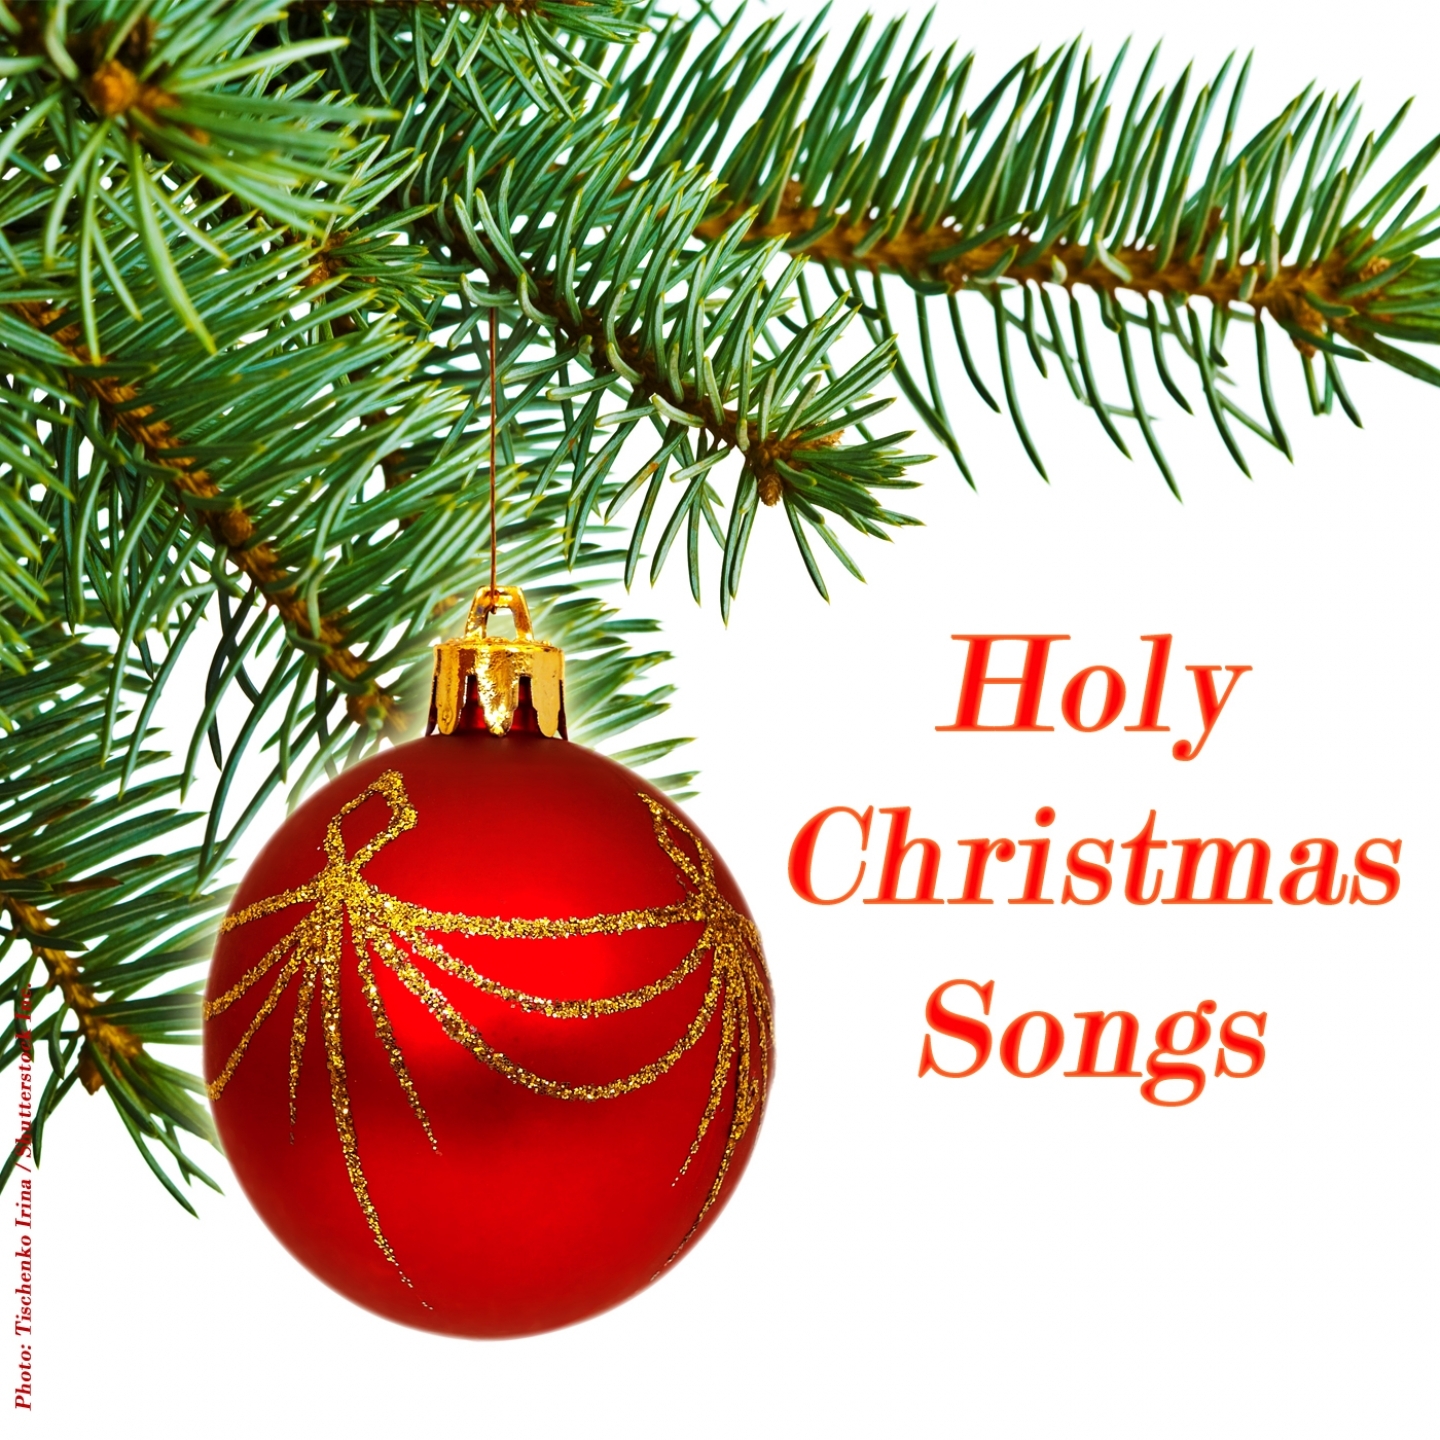 Holy Christmas Songs